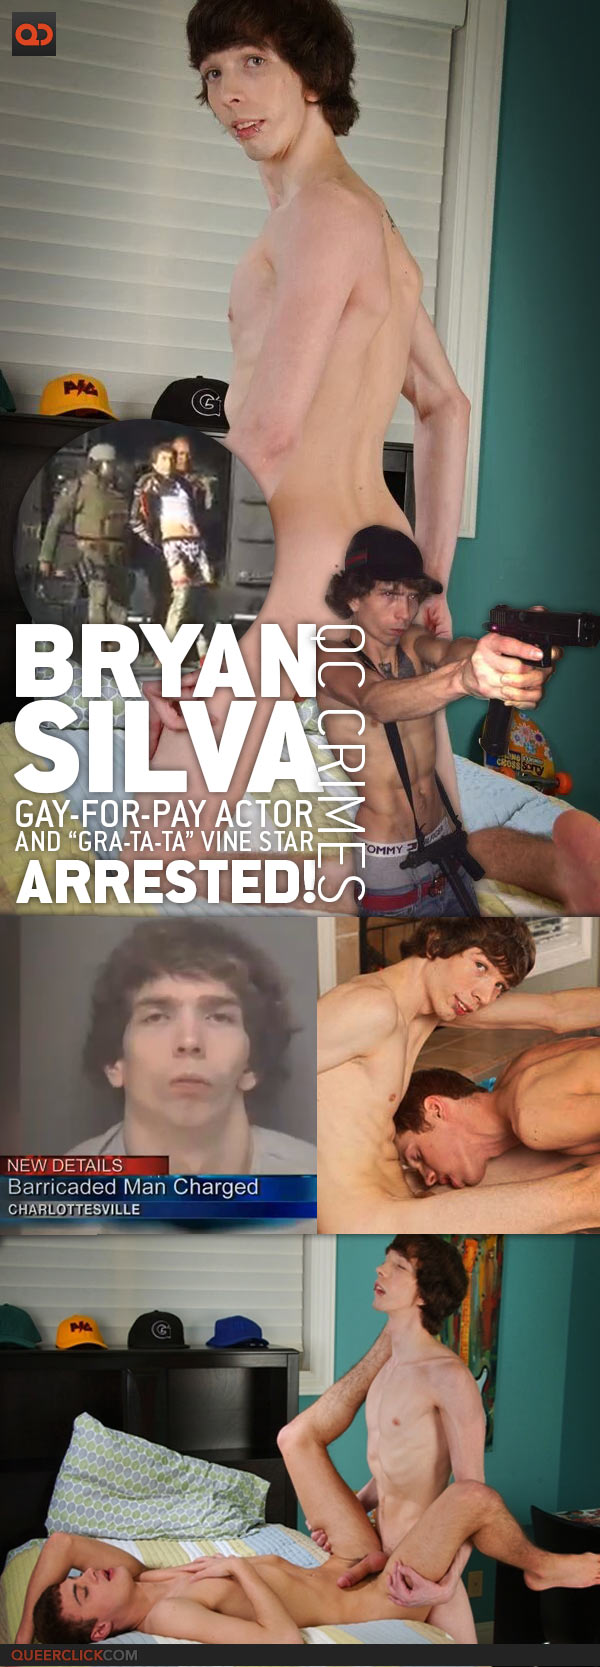 Bryan silva did gay porn